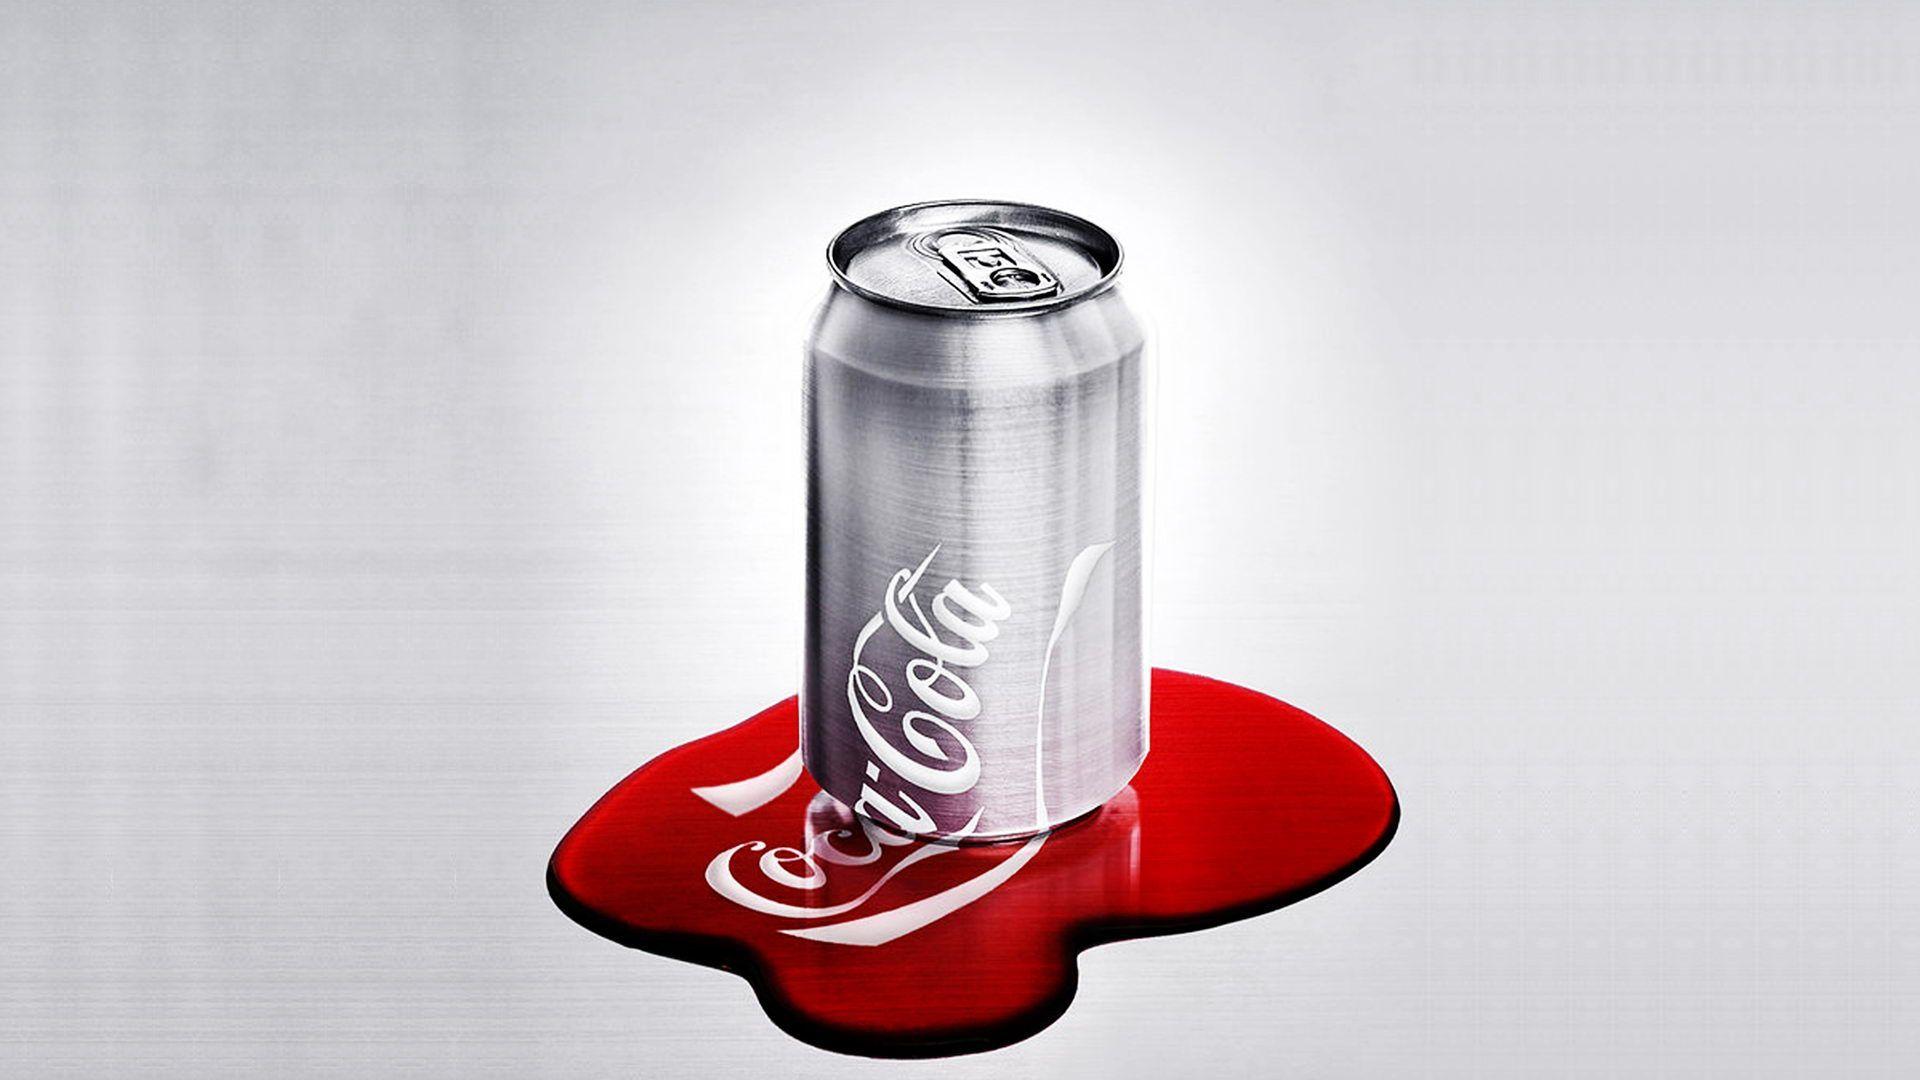 Download Coca Cola Wallpaper 2739 1920x1080 px High Resolution